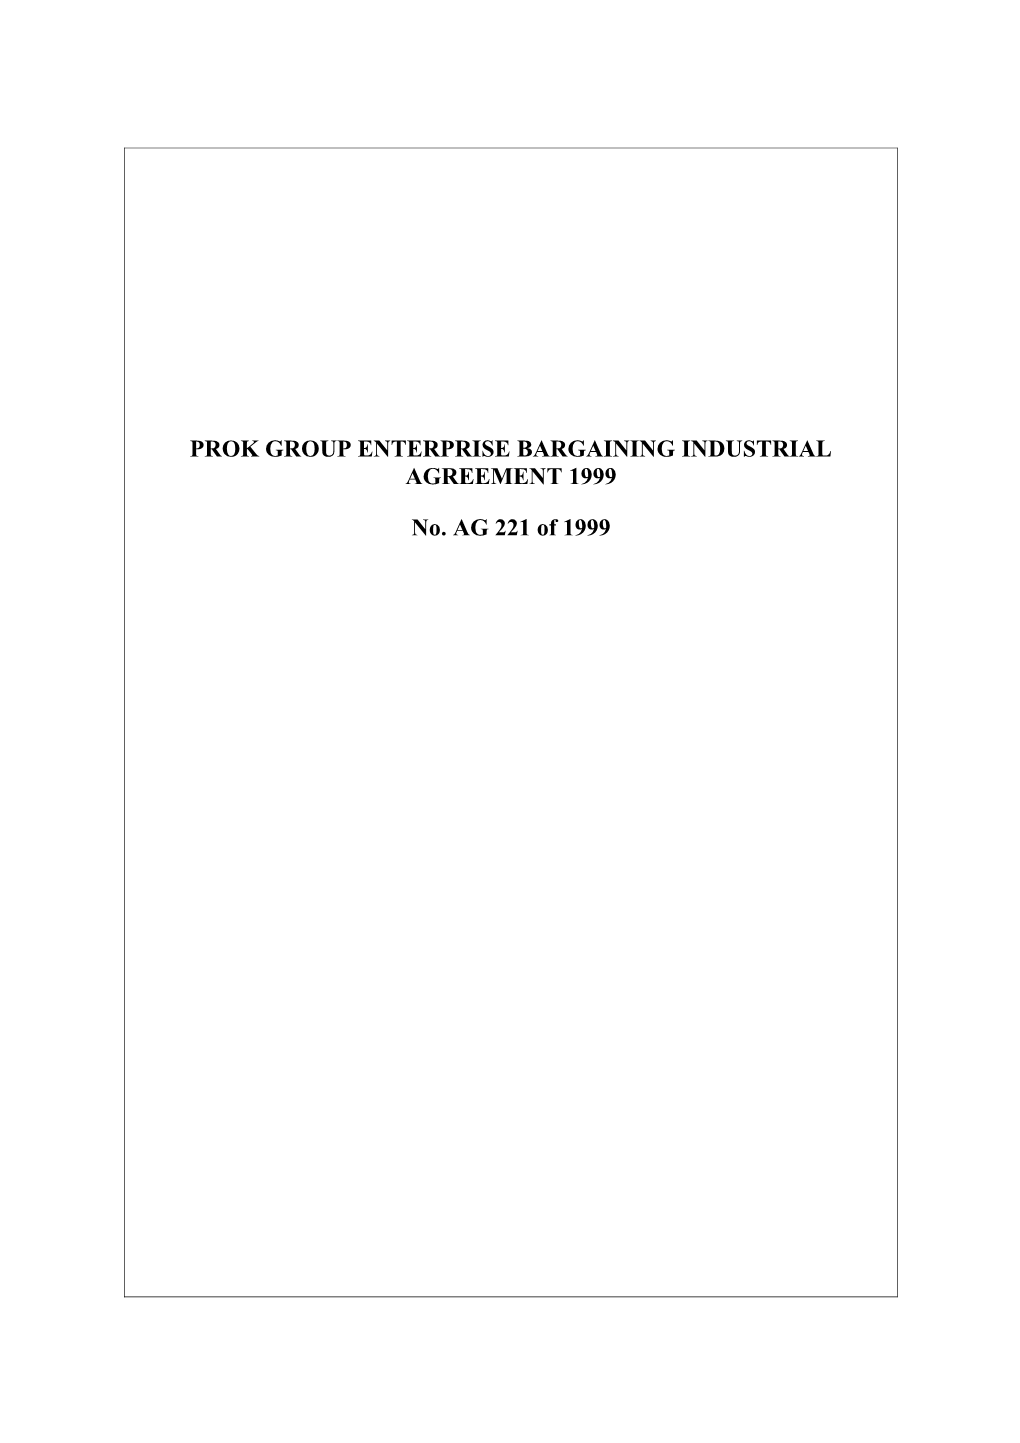 Prok Group Enterprise Bargaining Industrial Agreement 1999